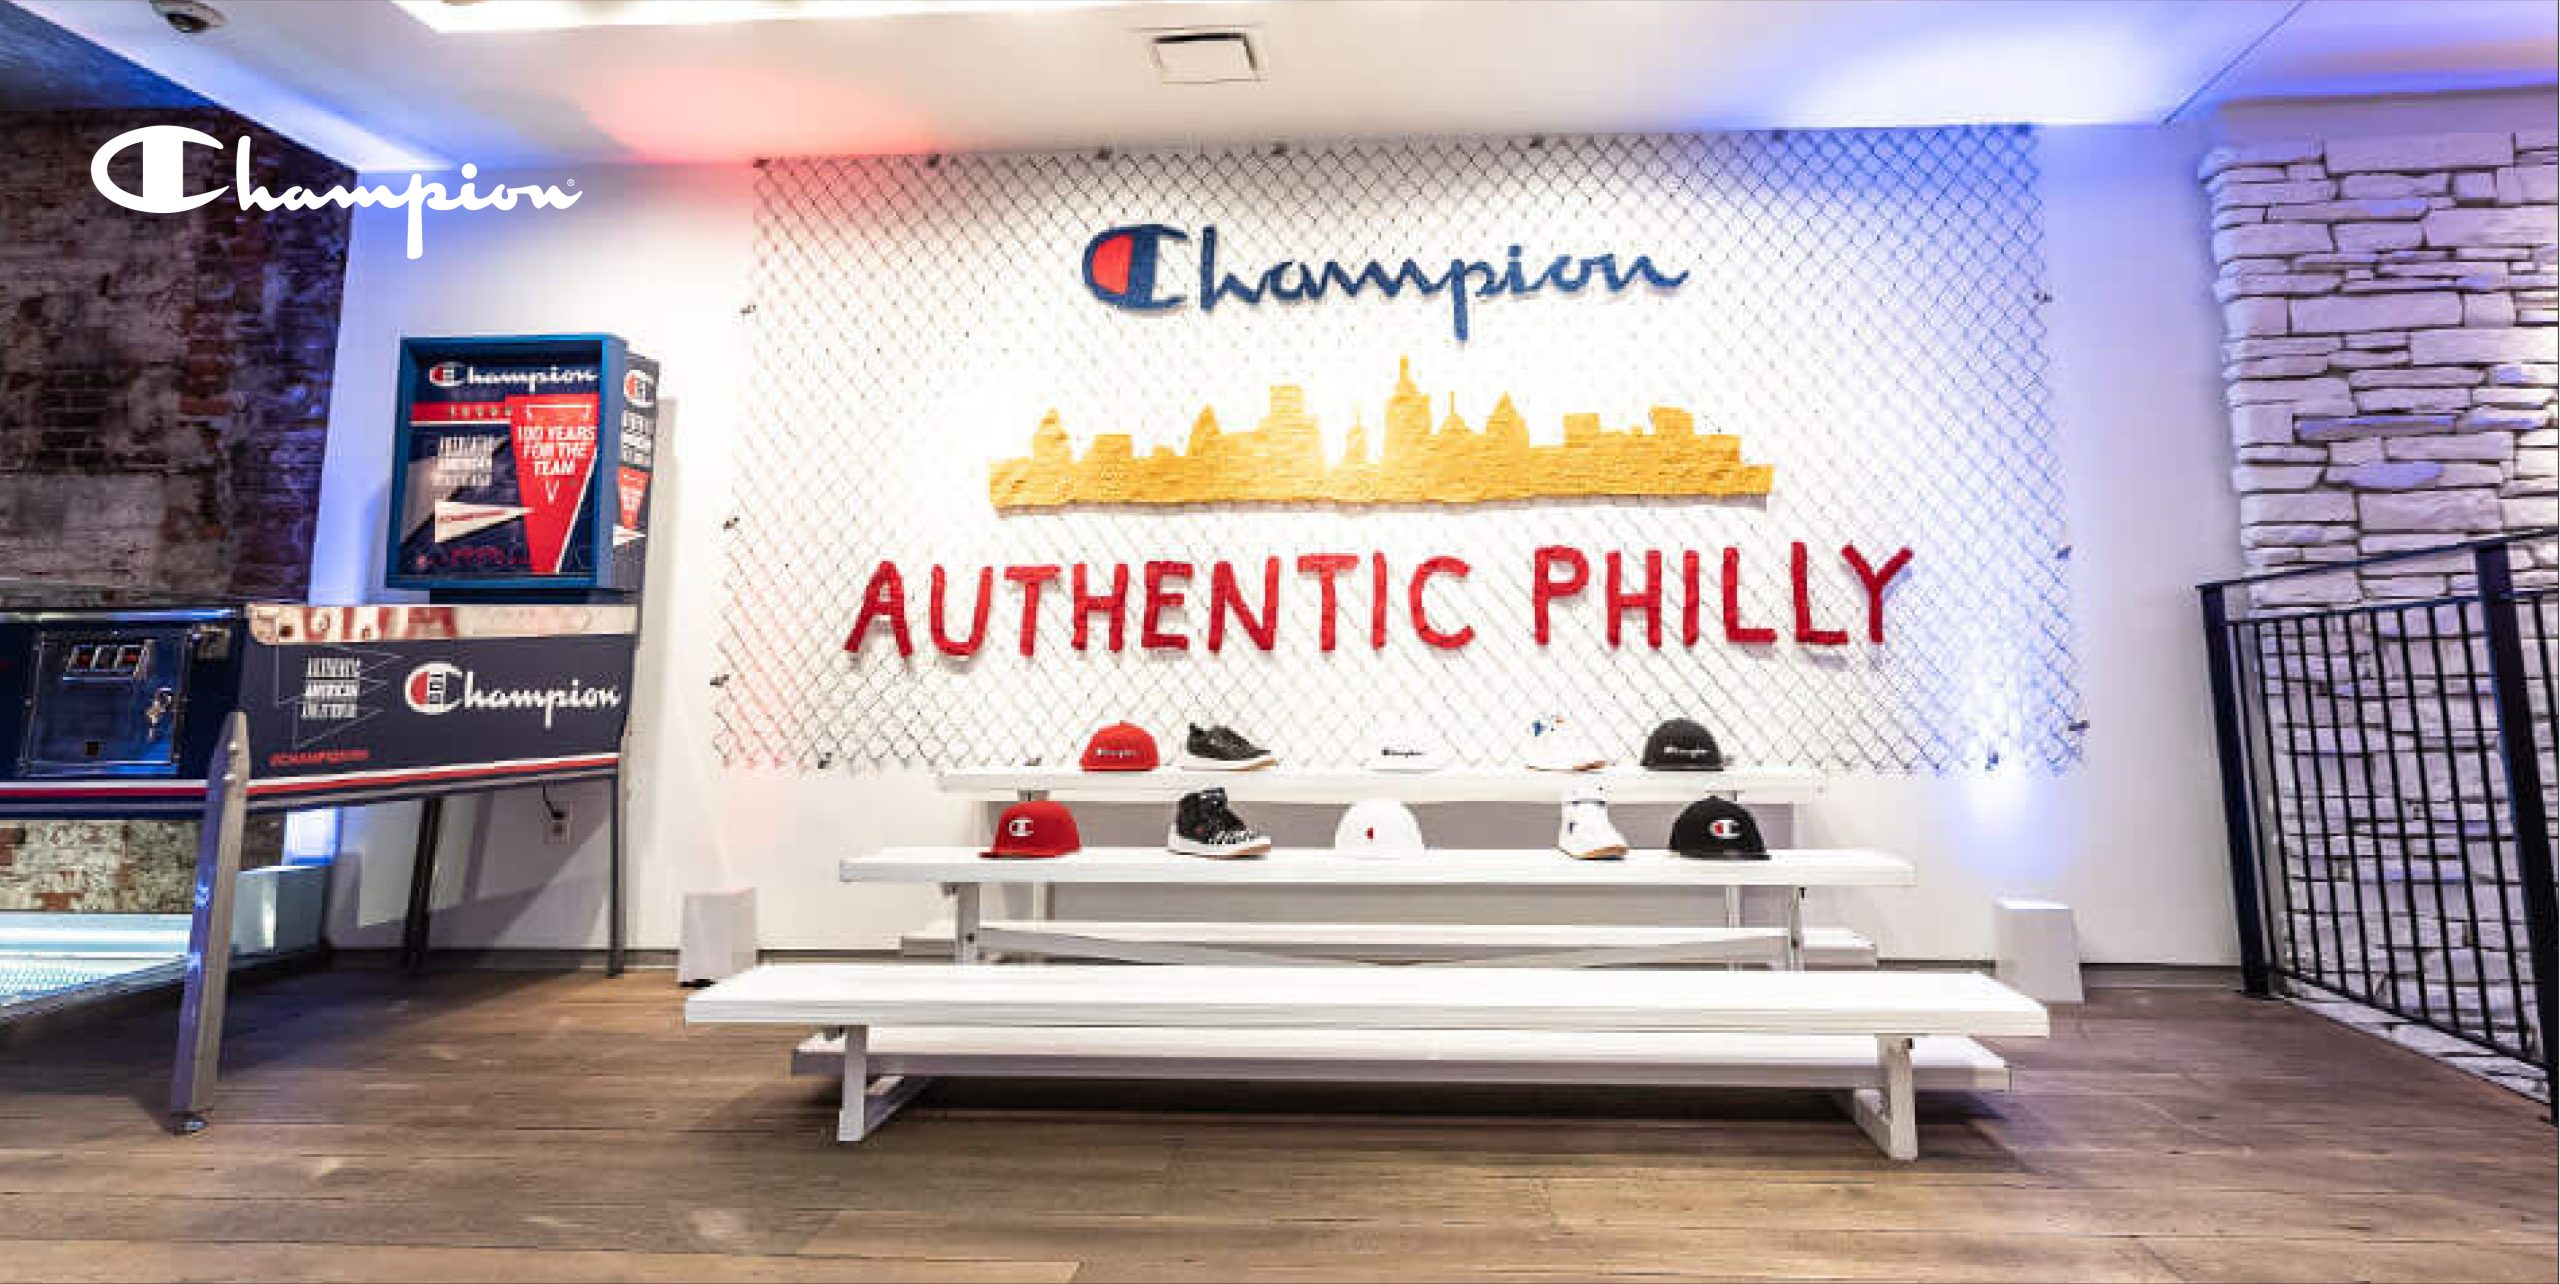 Inside the Philadelphia Champion athleticwear store